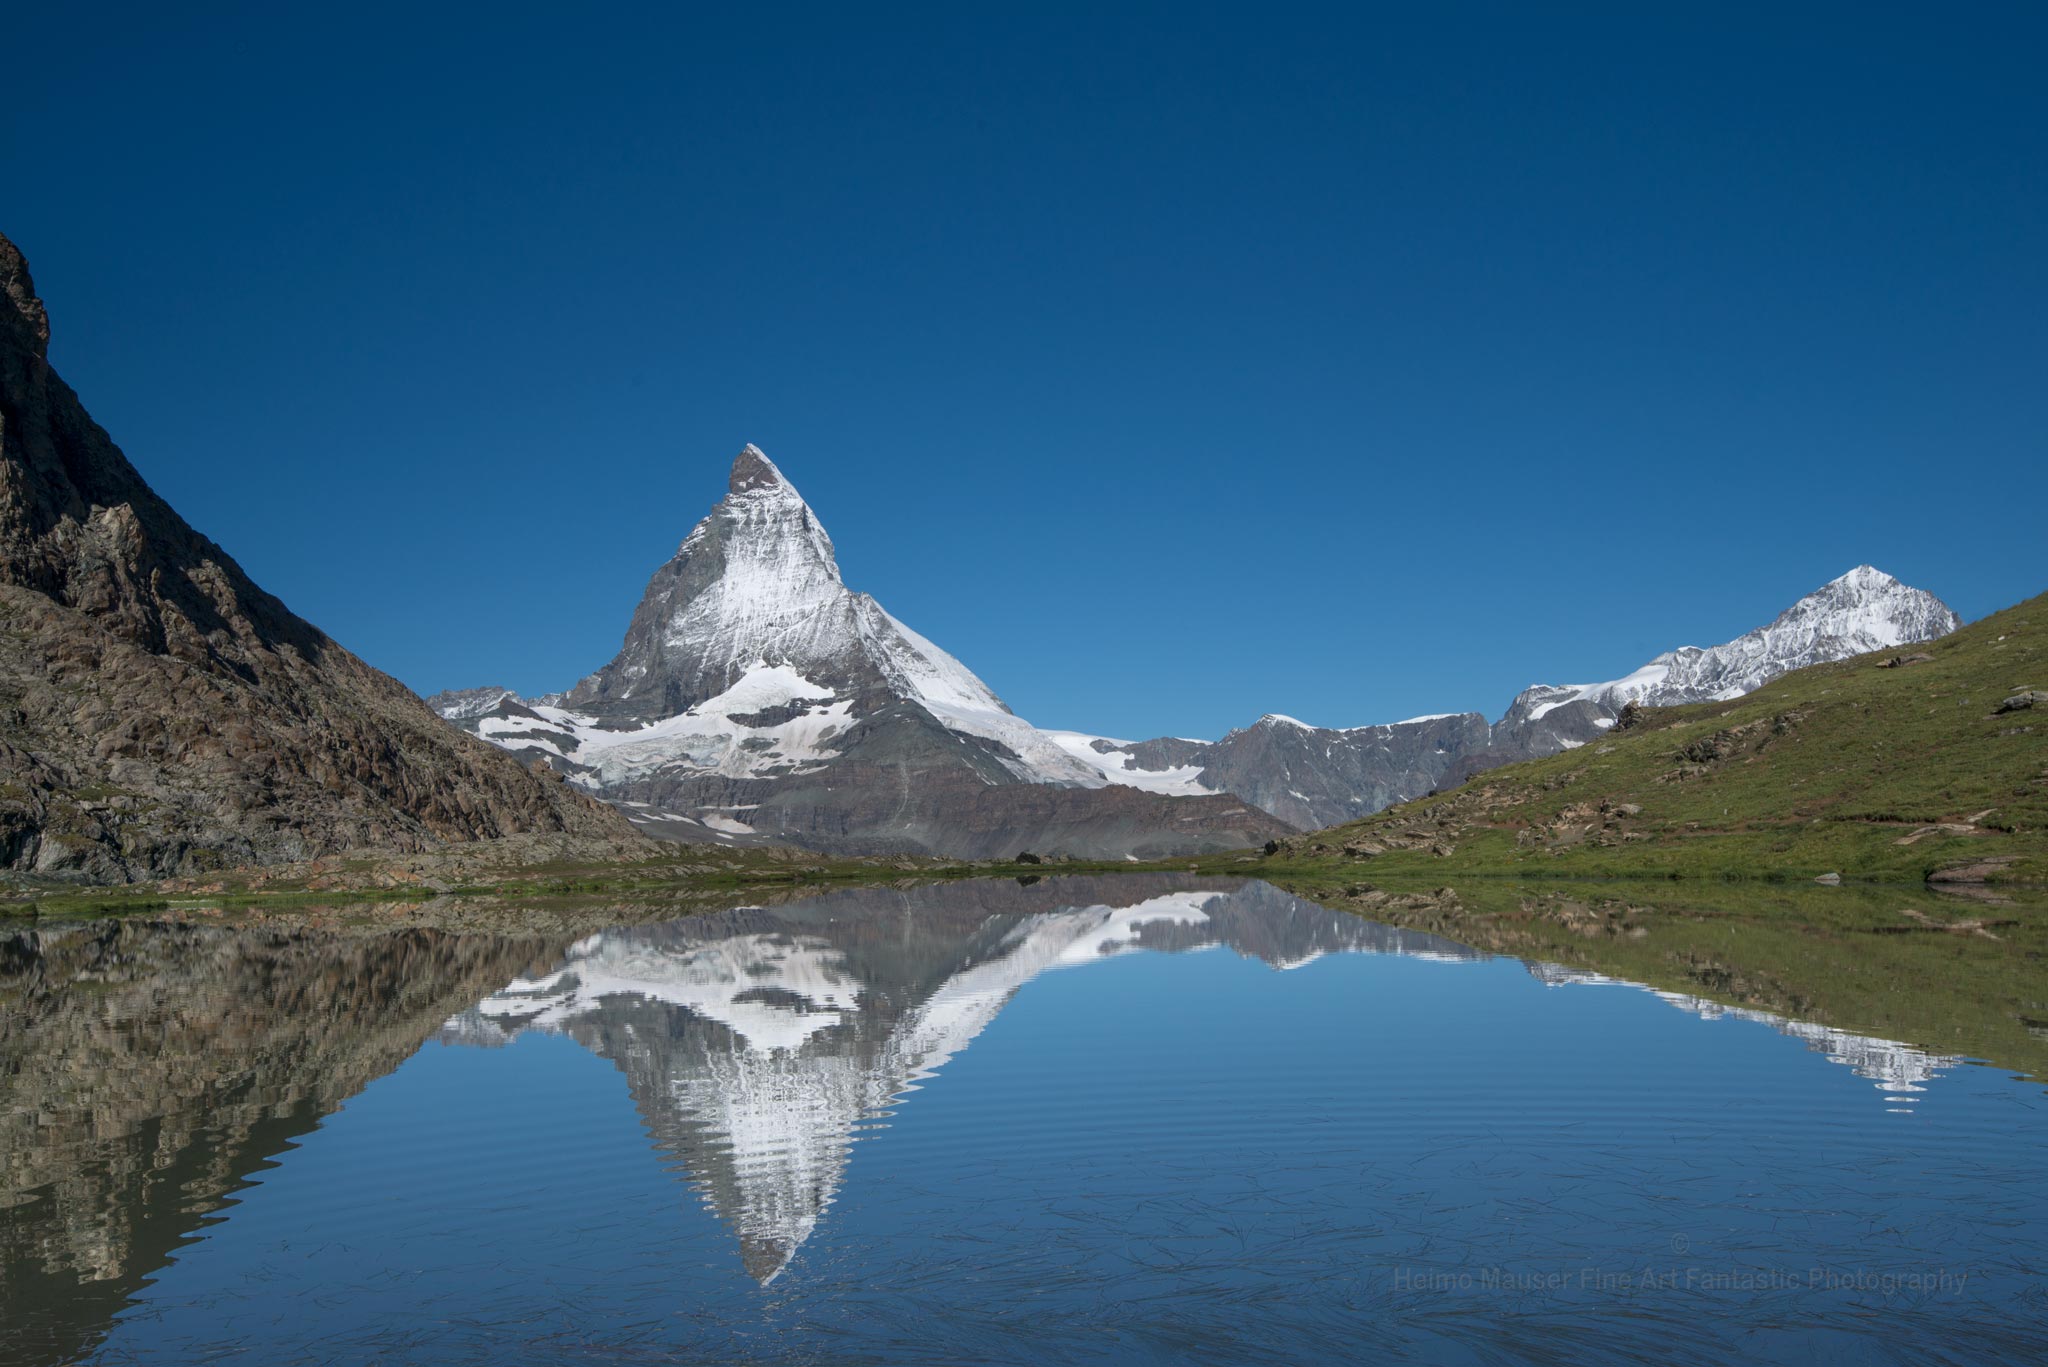 Reflections of Matterhorn in Riffelsee